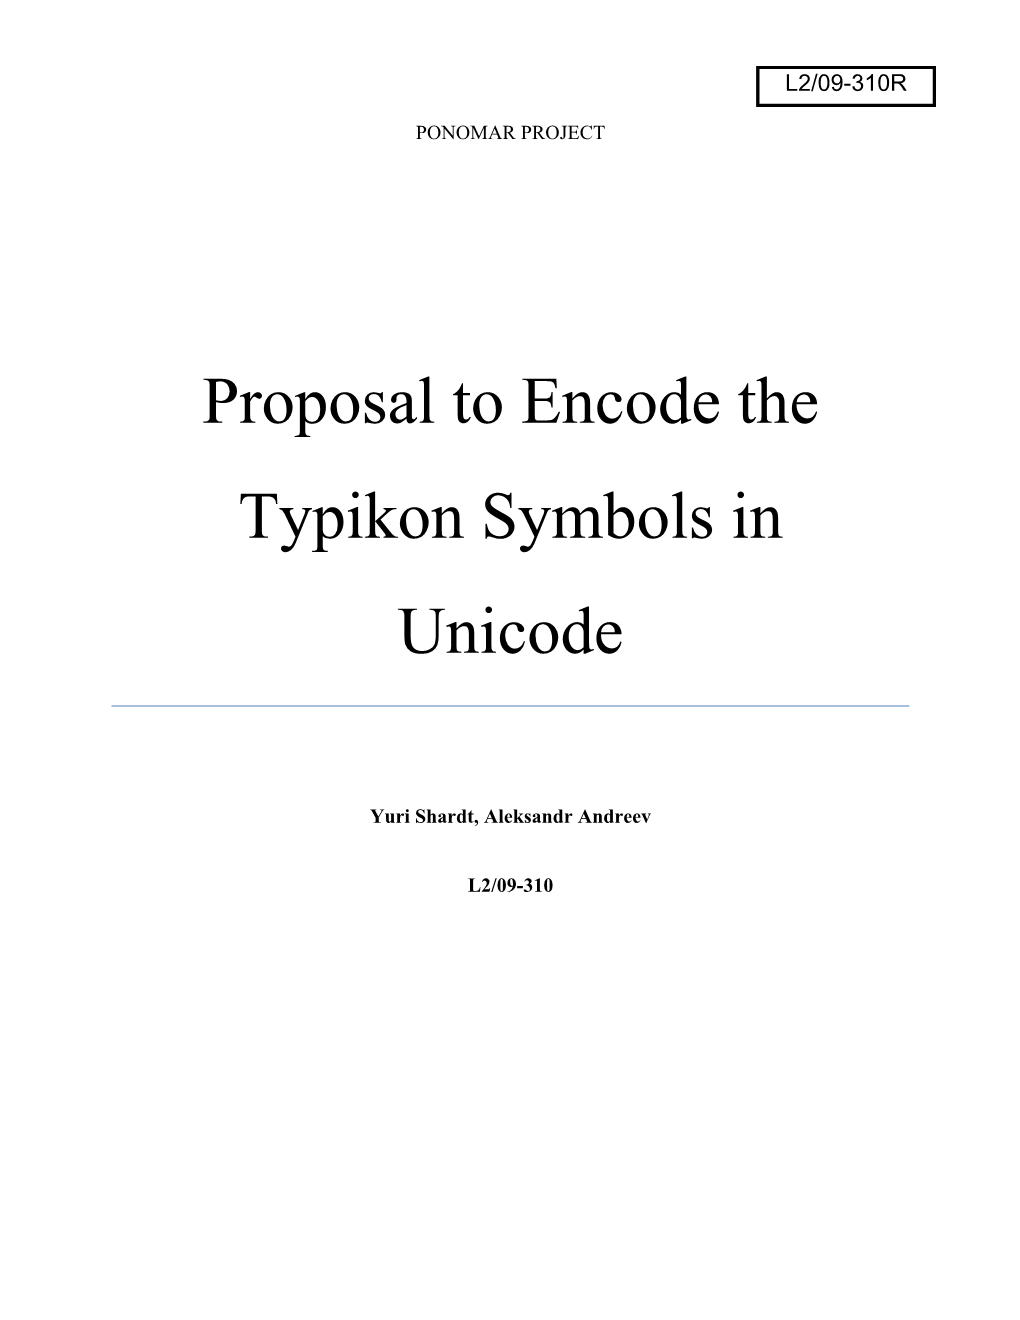 Proposal to Encode the Typikon Symbols in Unicode